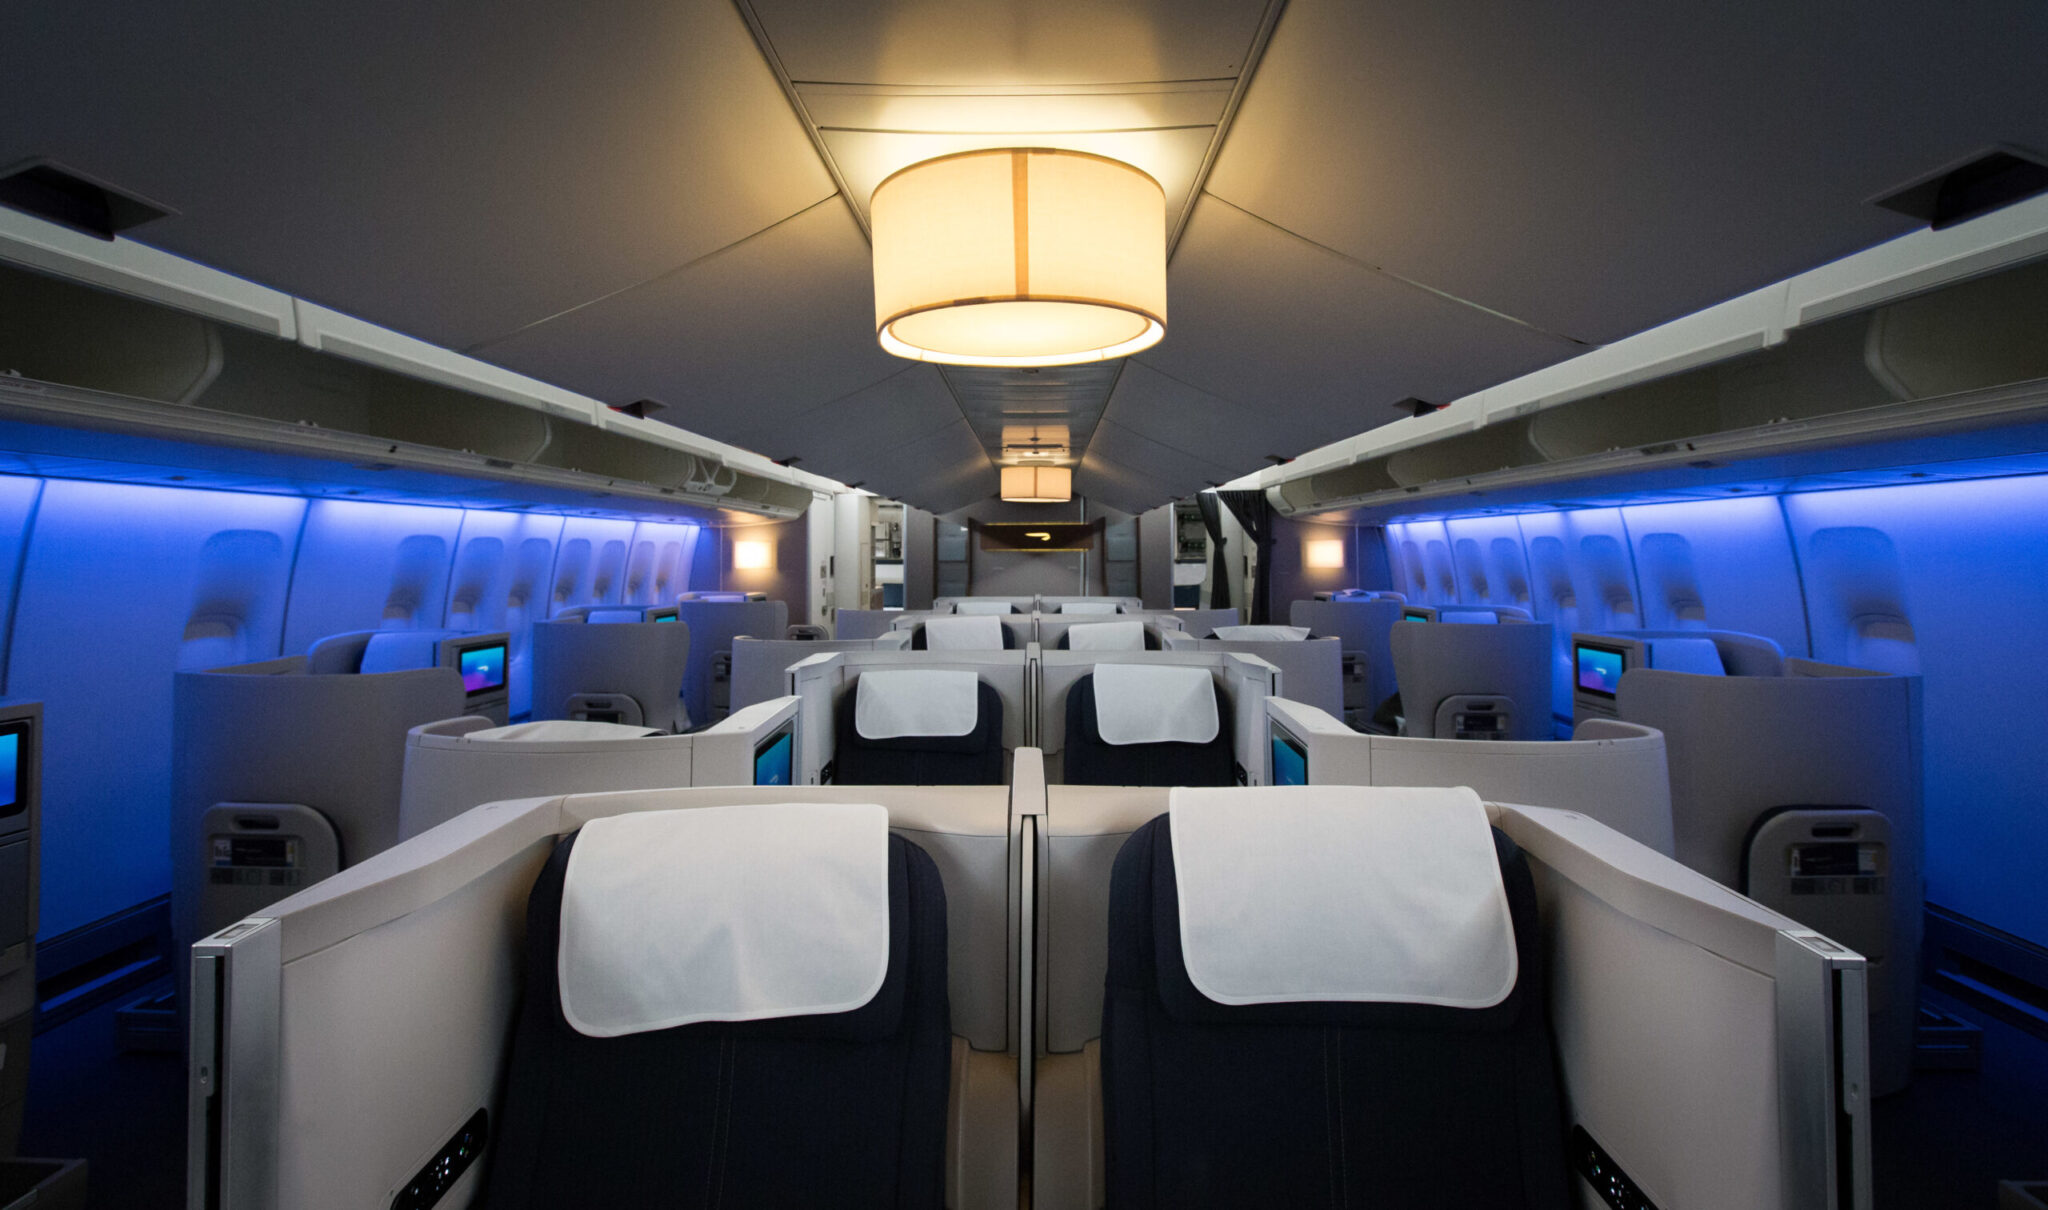 British Airways Club World - Refreshed Seats